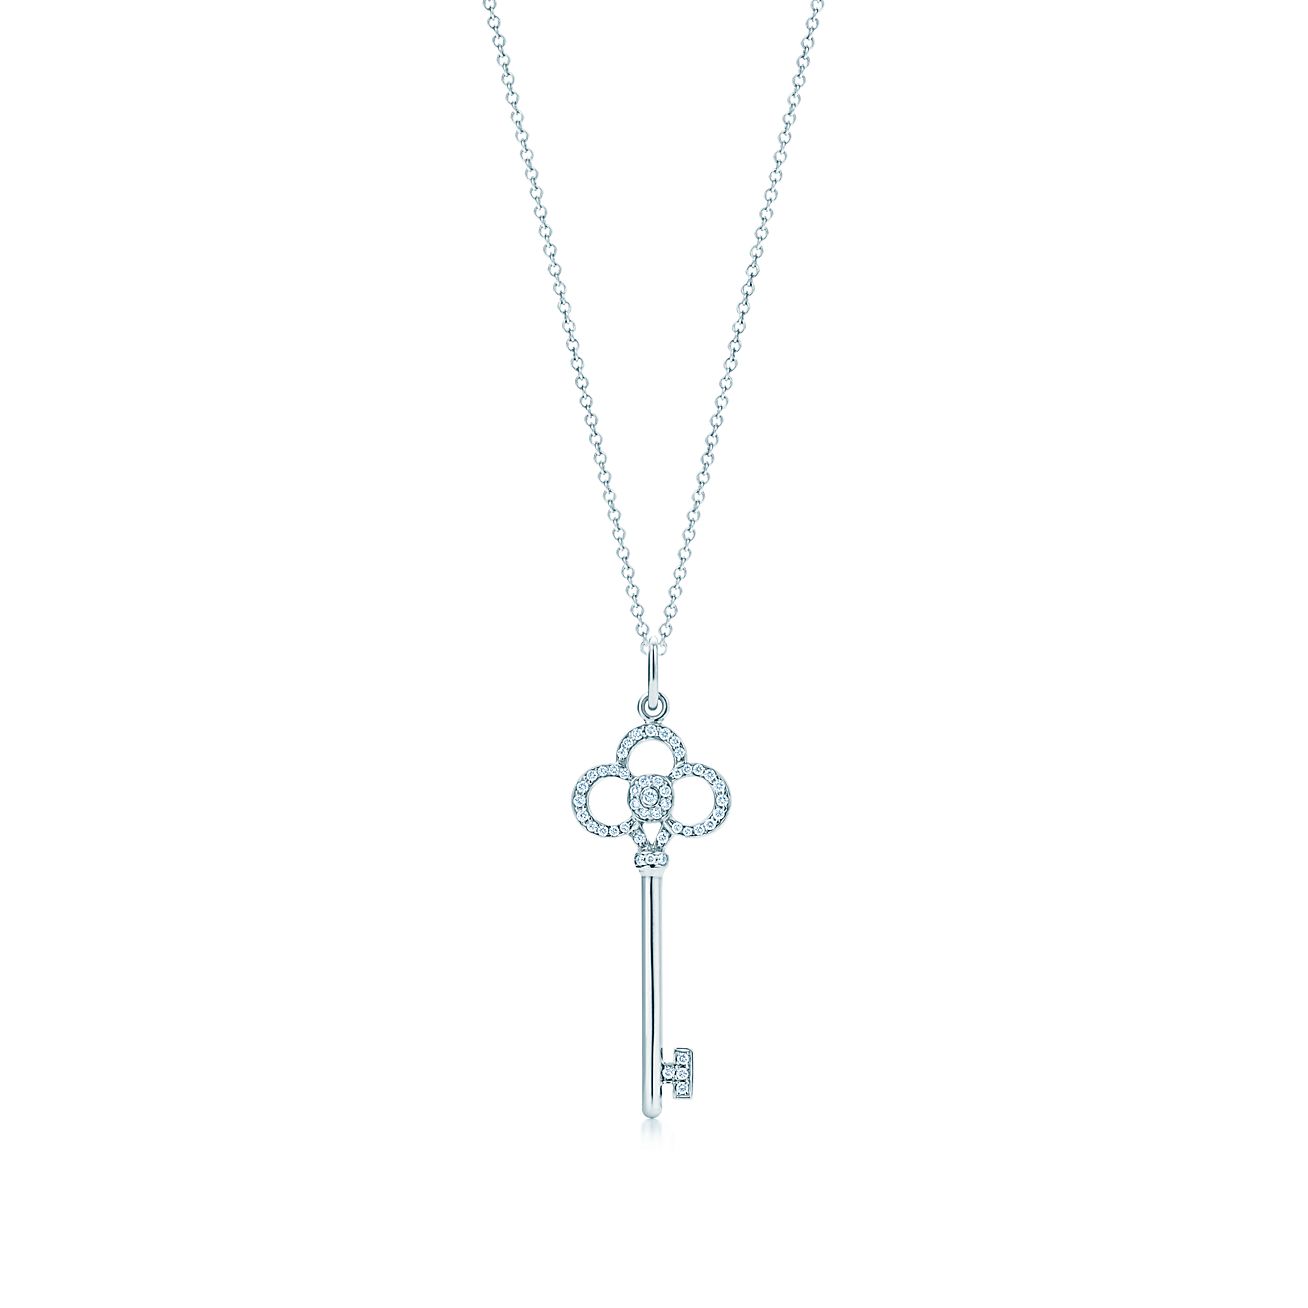 tiffany necklace with key